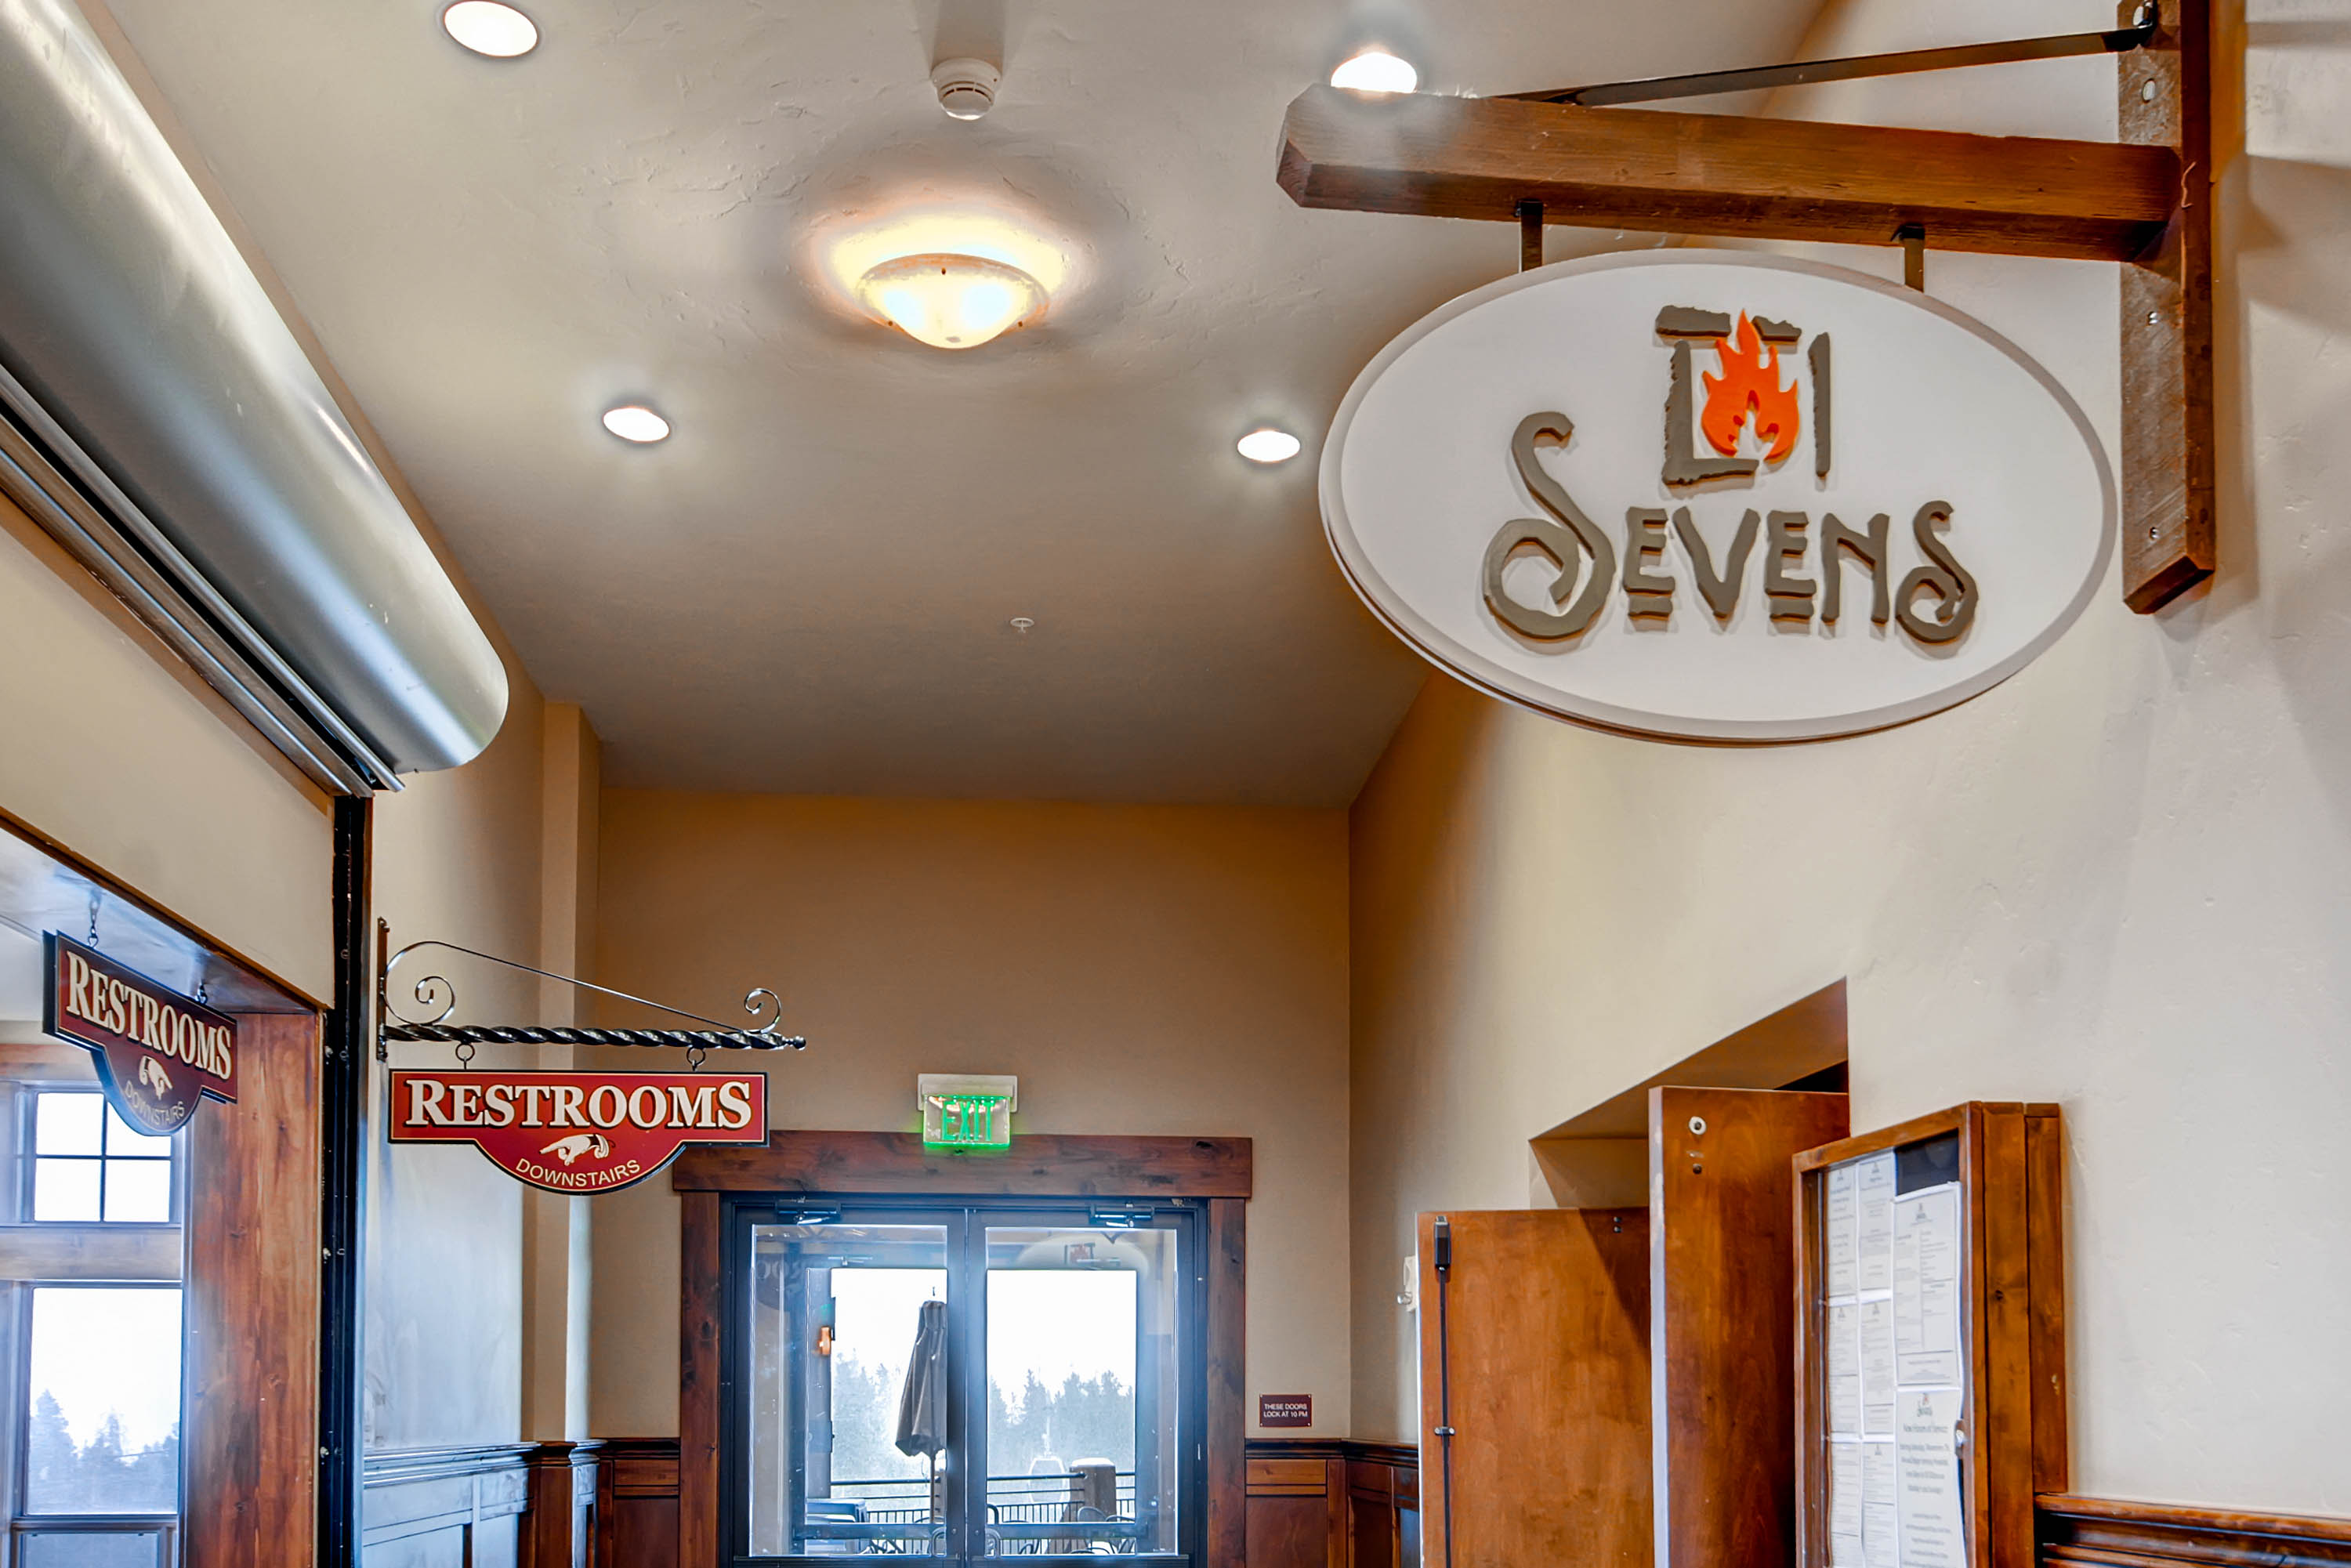 Enjoy a wonderful meal at the Sevens restaurant.